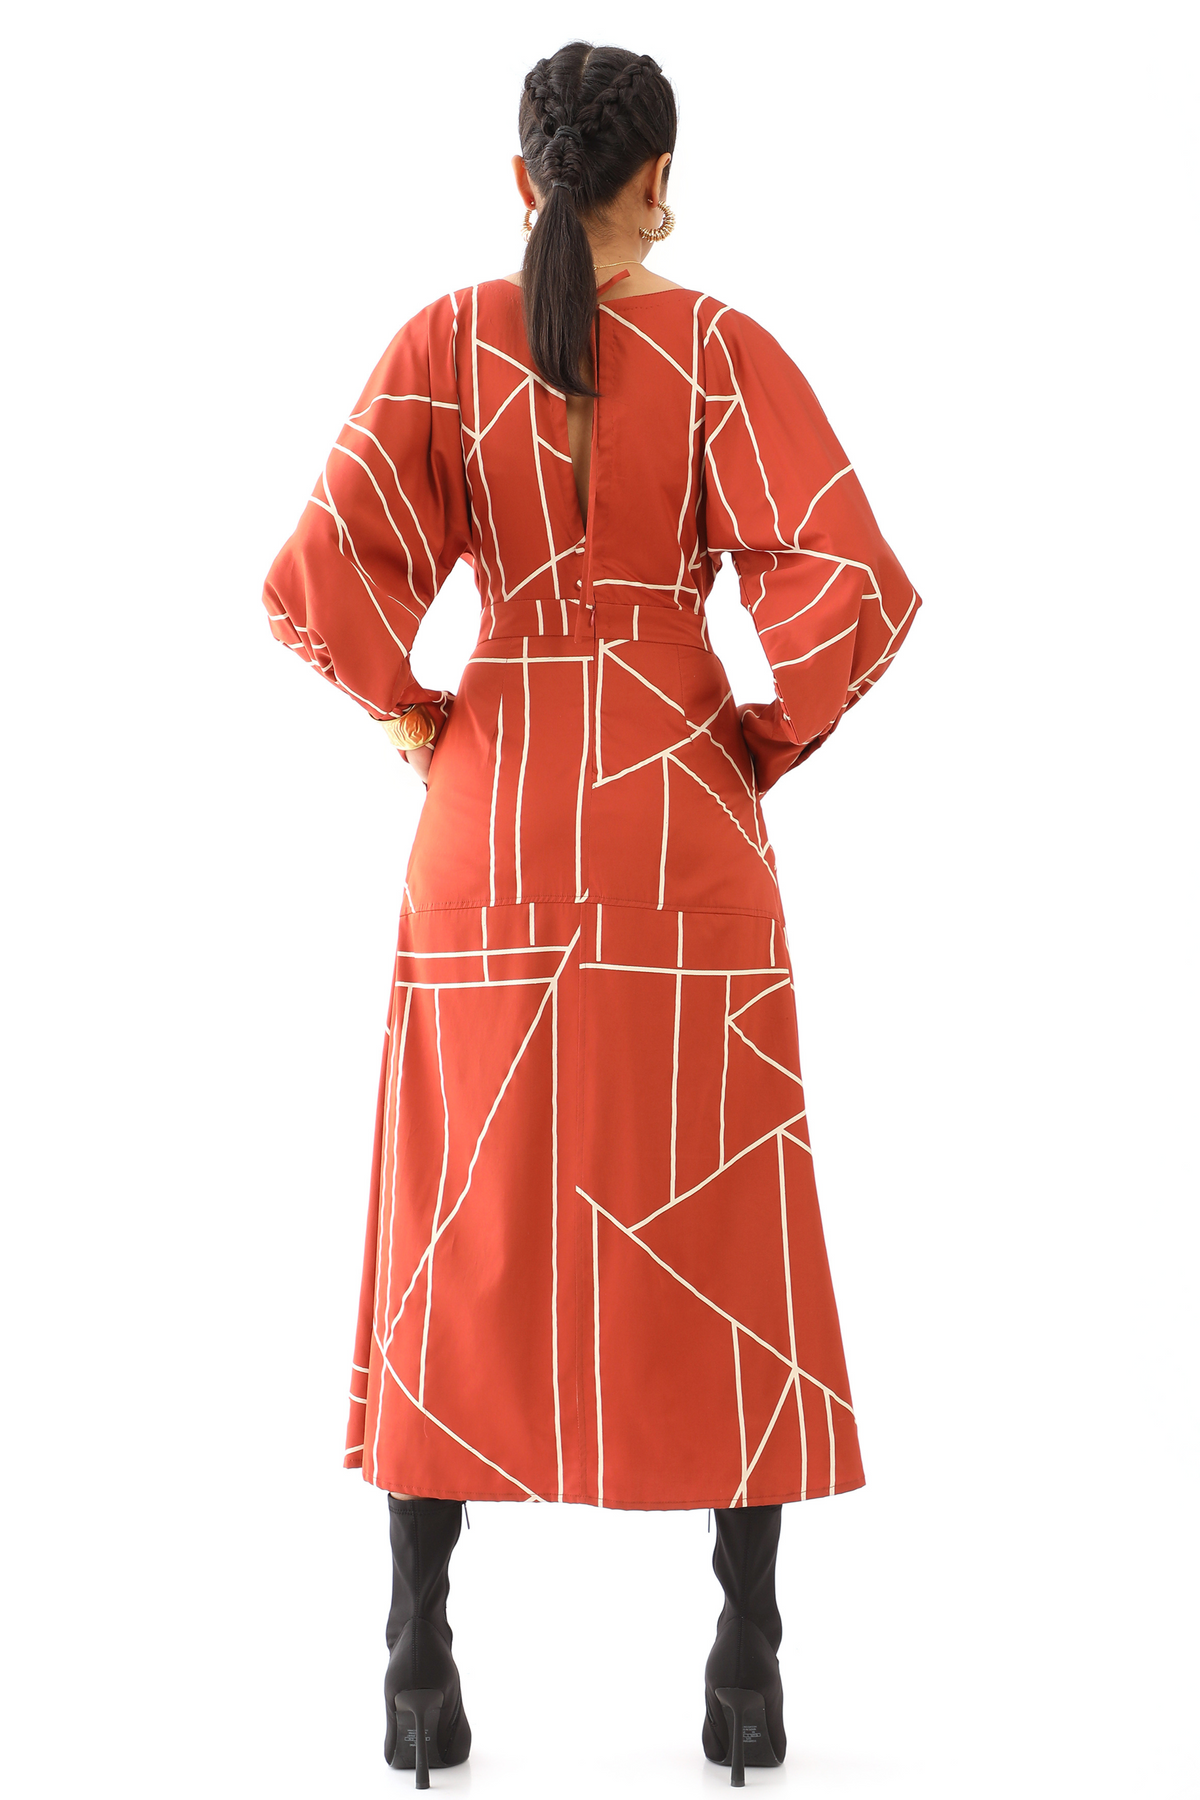 Naya - Rust Dress